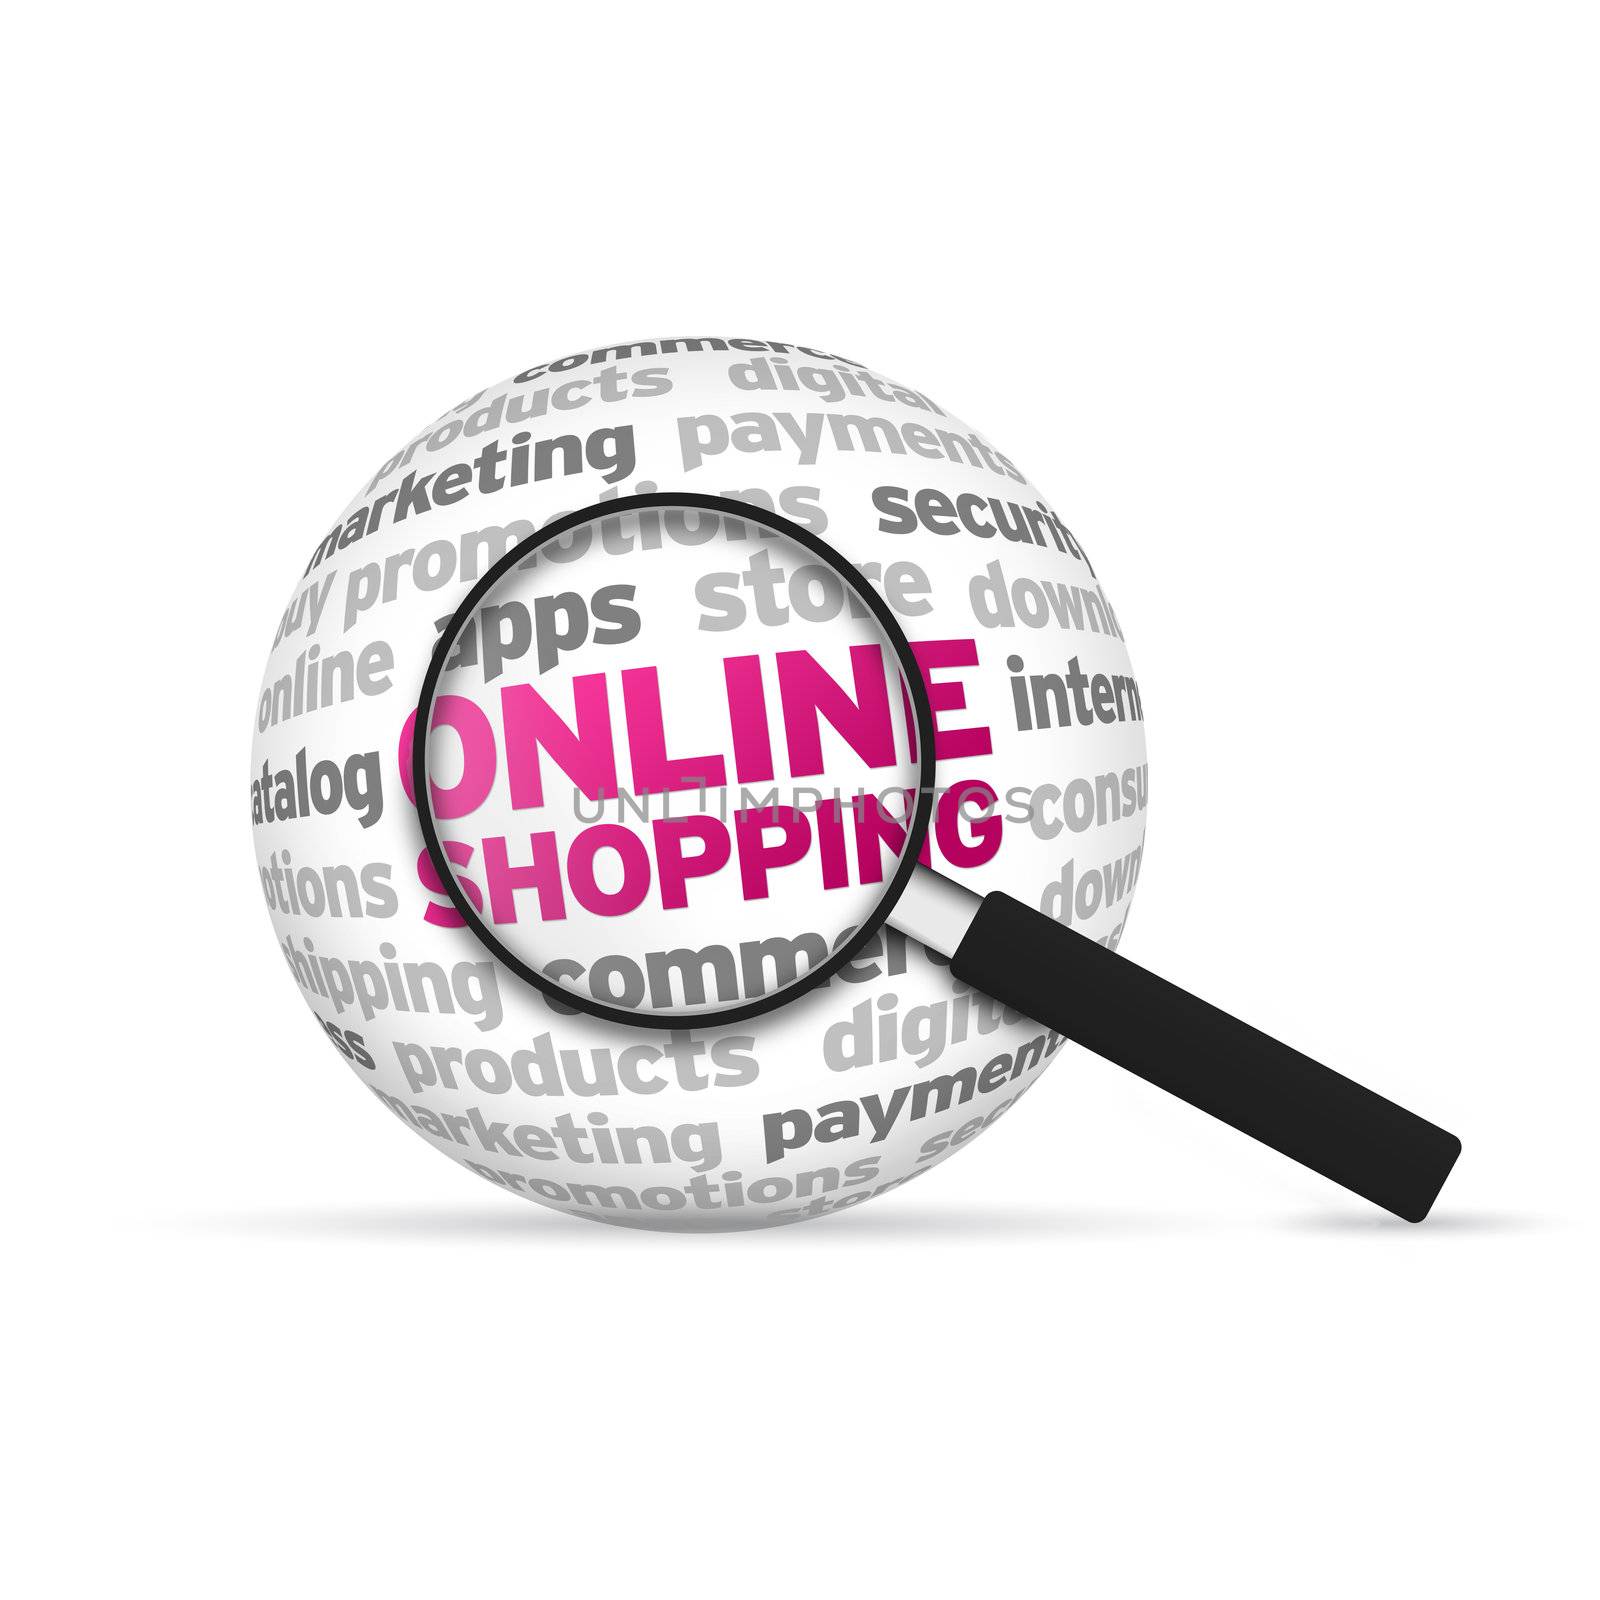 Online Shopping by kbuntu